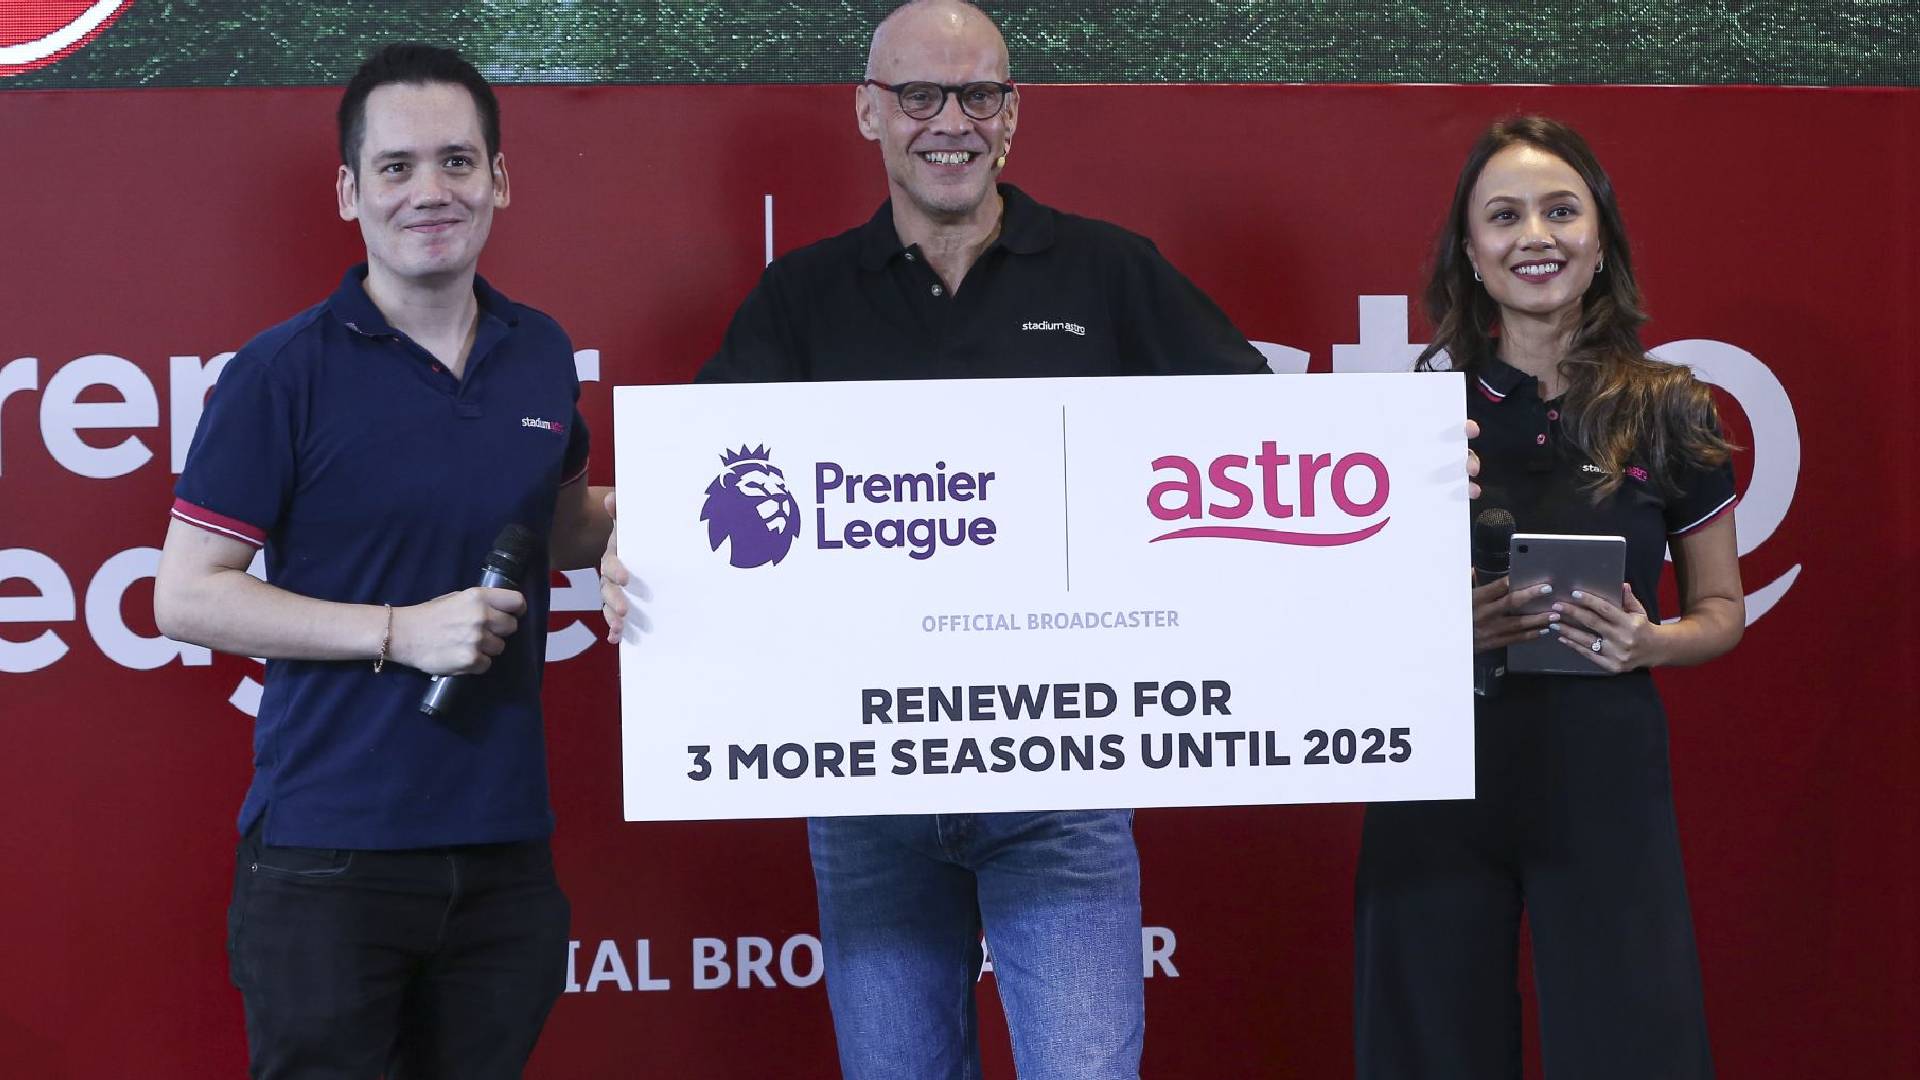 astro renew kontrak liga perdana inggeris Astro Perbaharui Hak Siaran Liga Perdana Inggeris Sehingga 2025